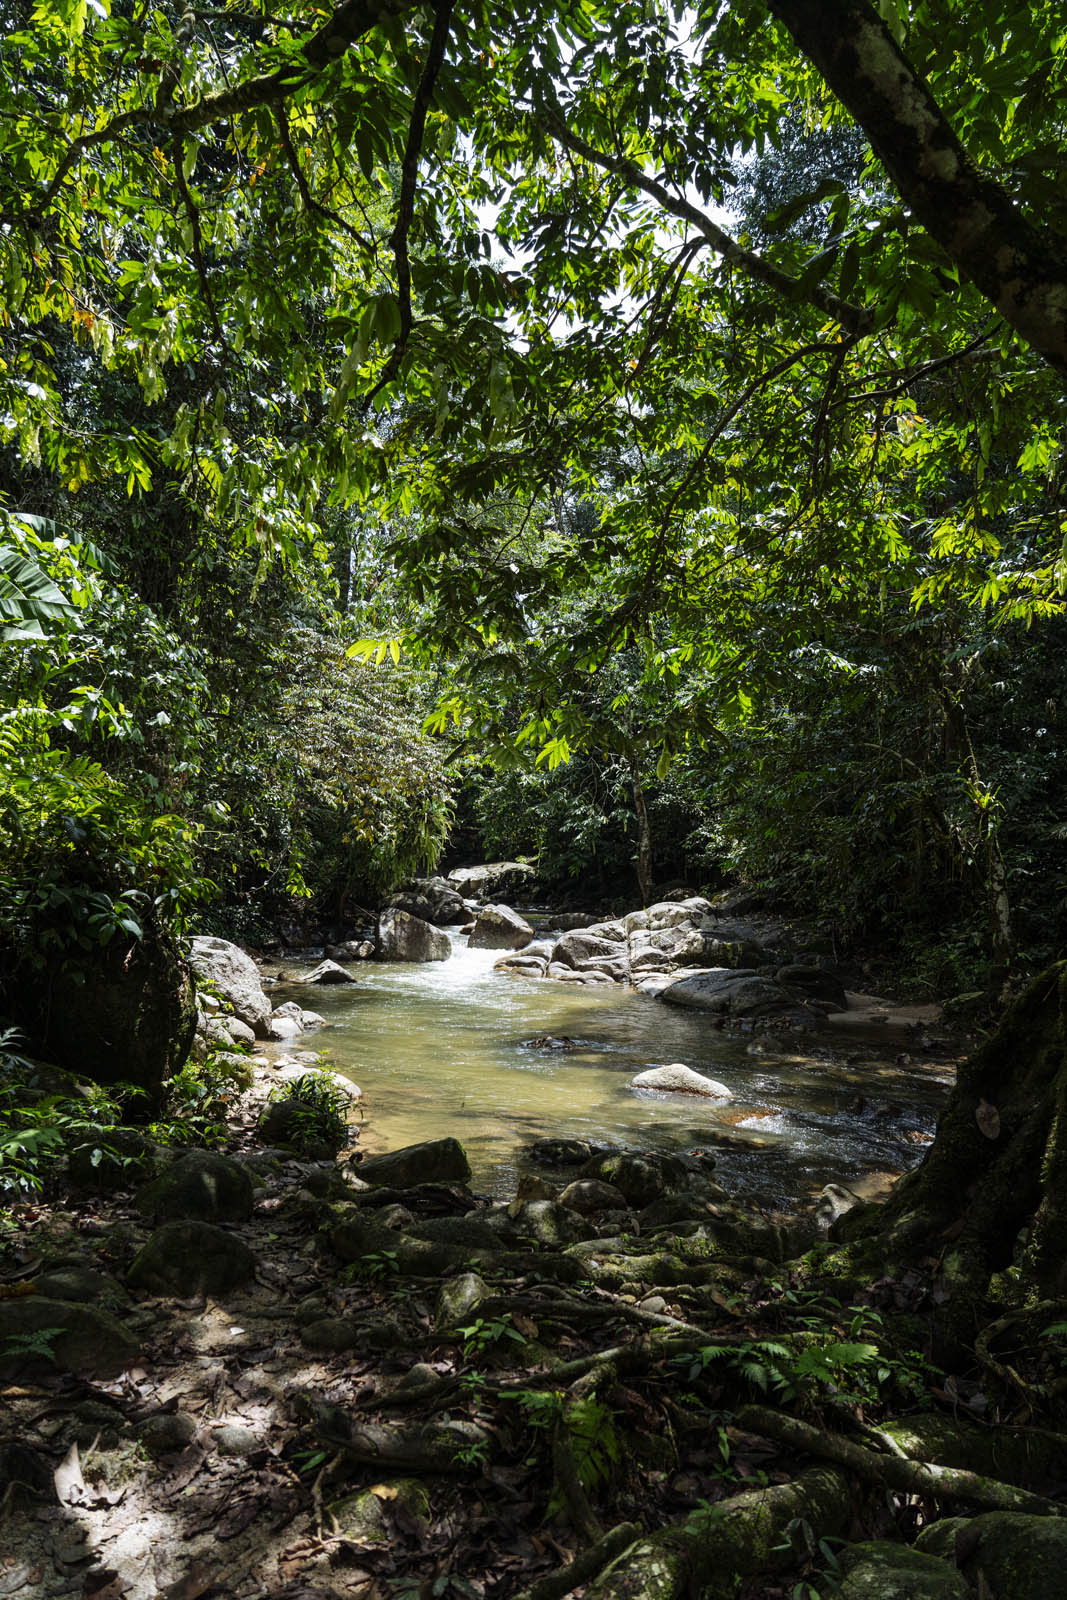 Ulu Geroh’s Rafflesia hike brings visitors through lush rainforest. Photo by Teoh Eng Hooi.